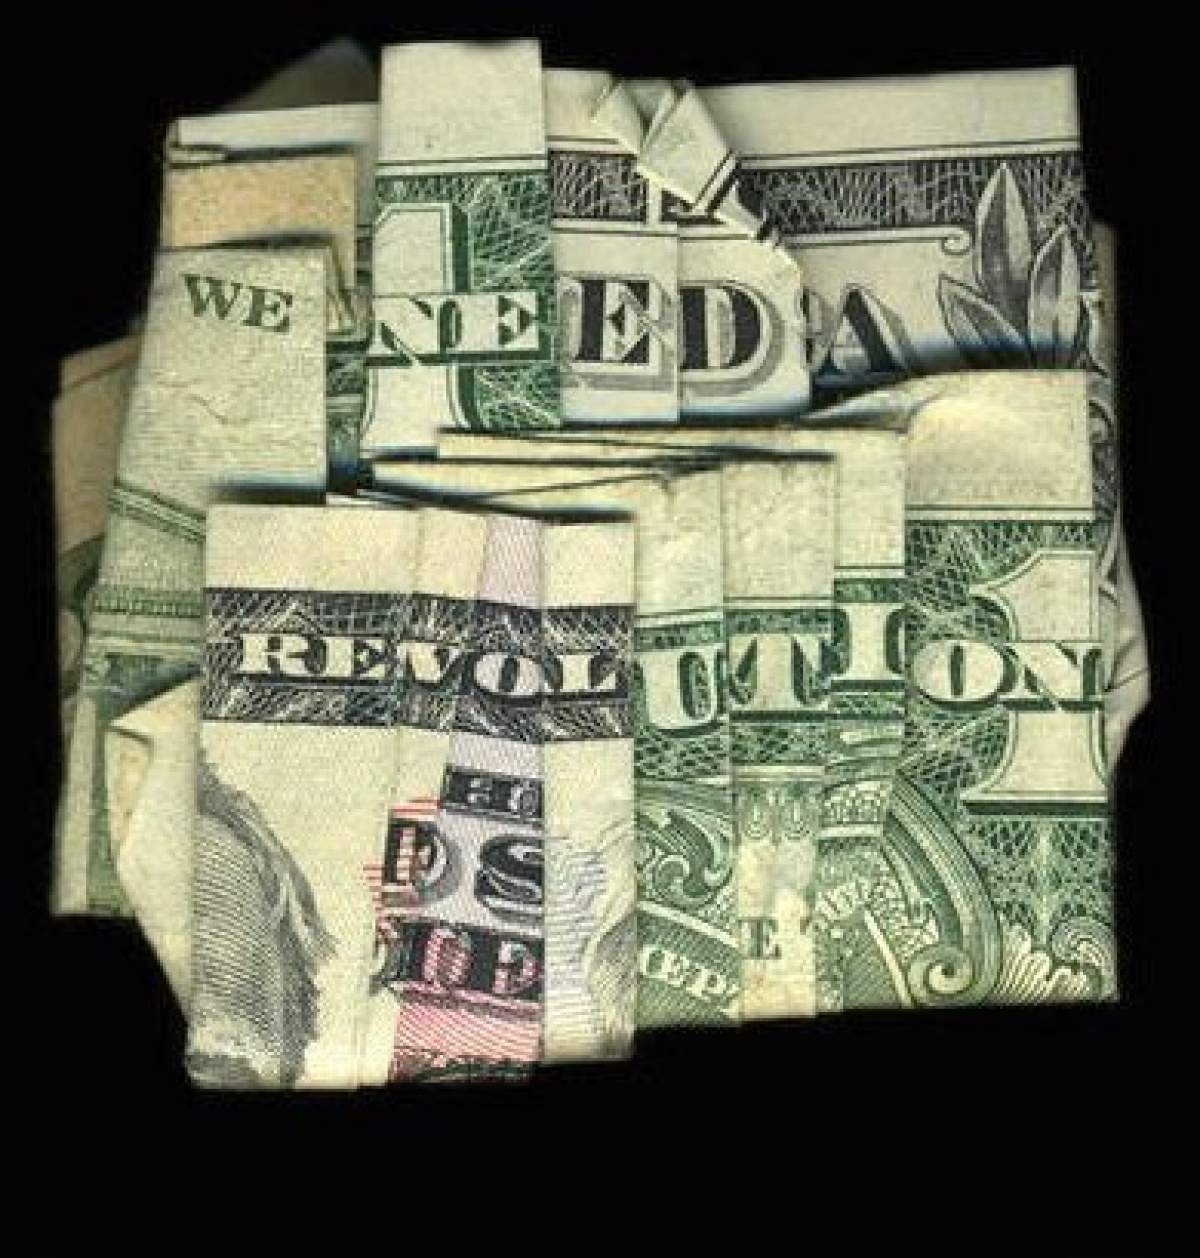 Dollar bills folded to read "We need a Revolution"